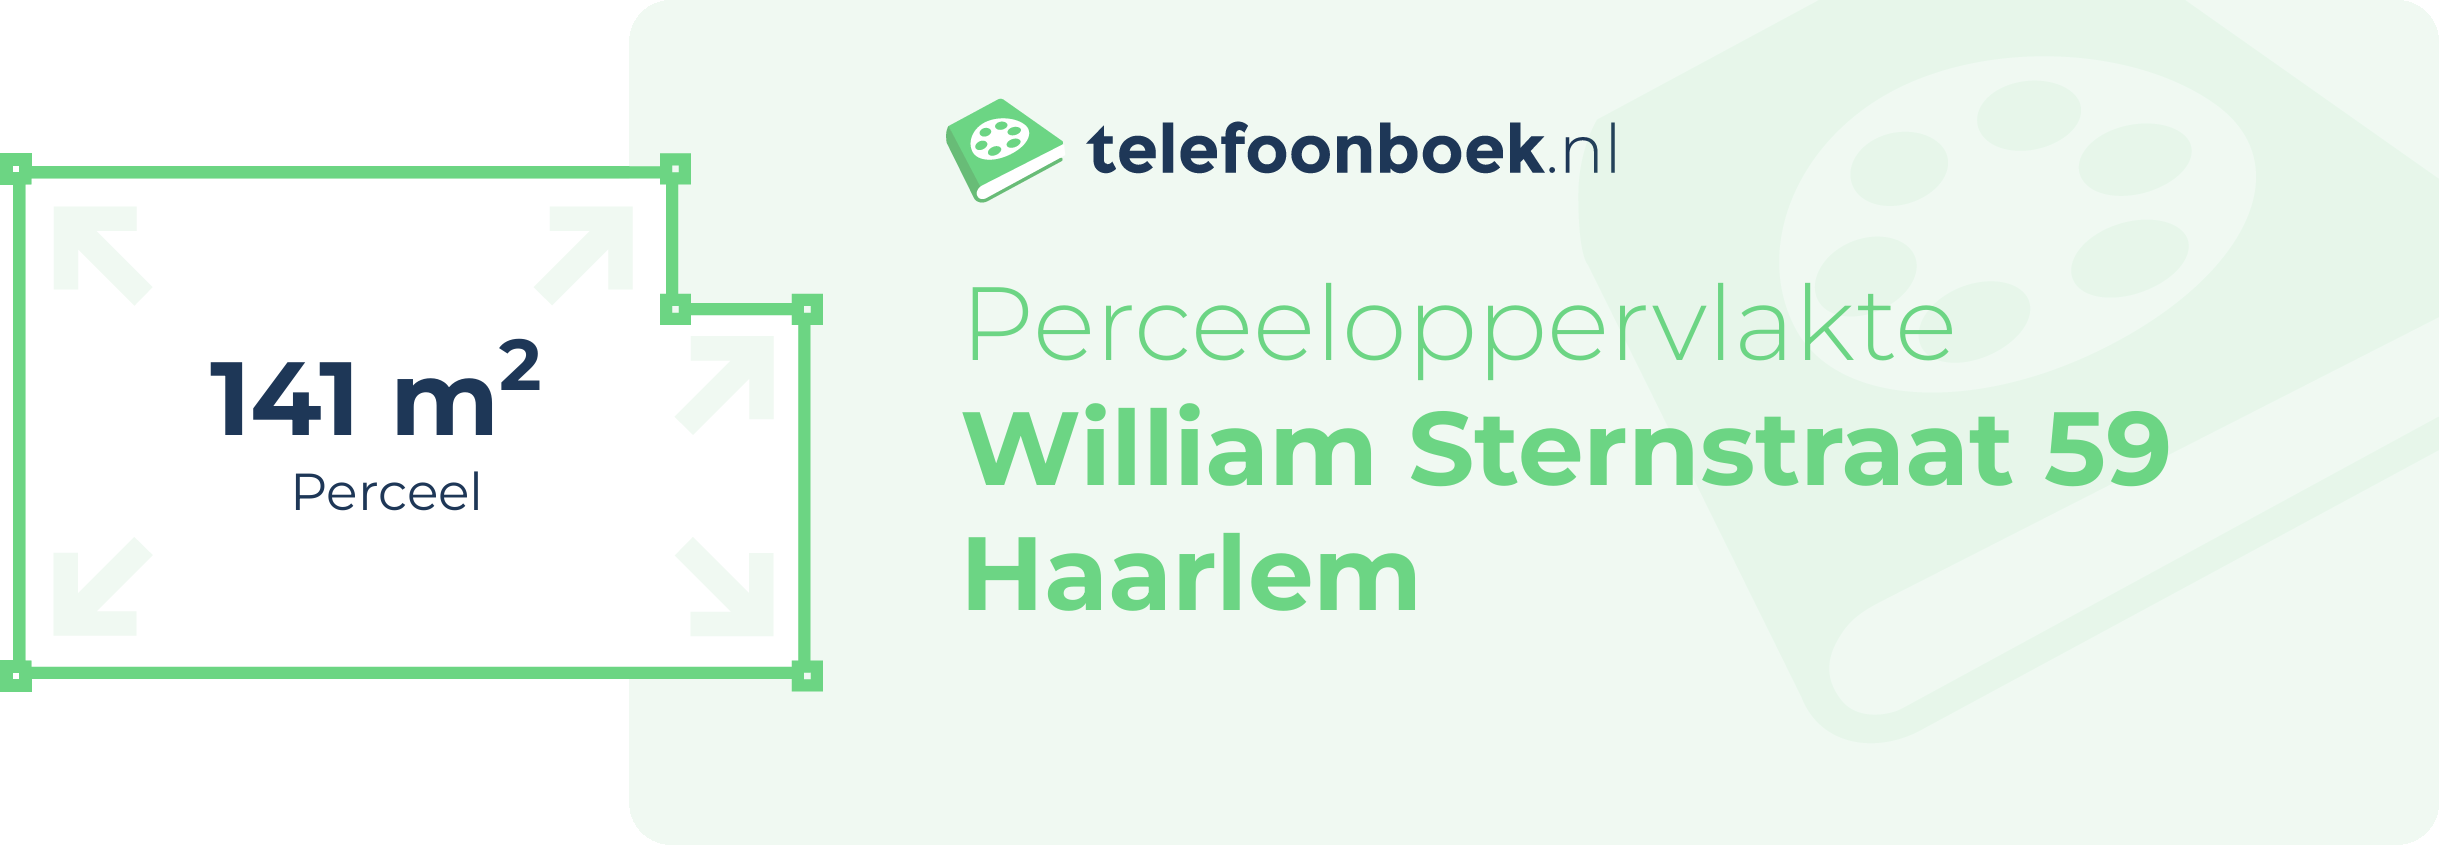 Perceeloppervlakte William Sternstraat 59 Haarlem